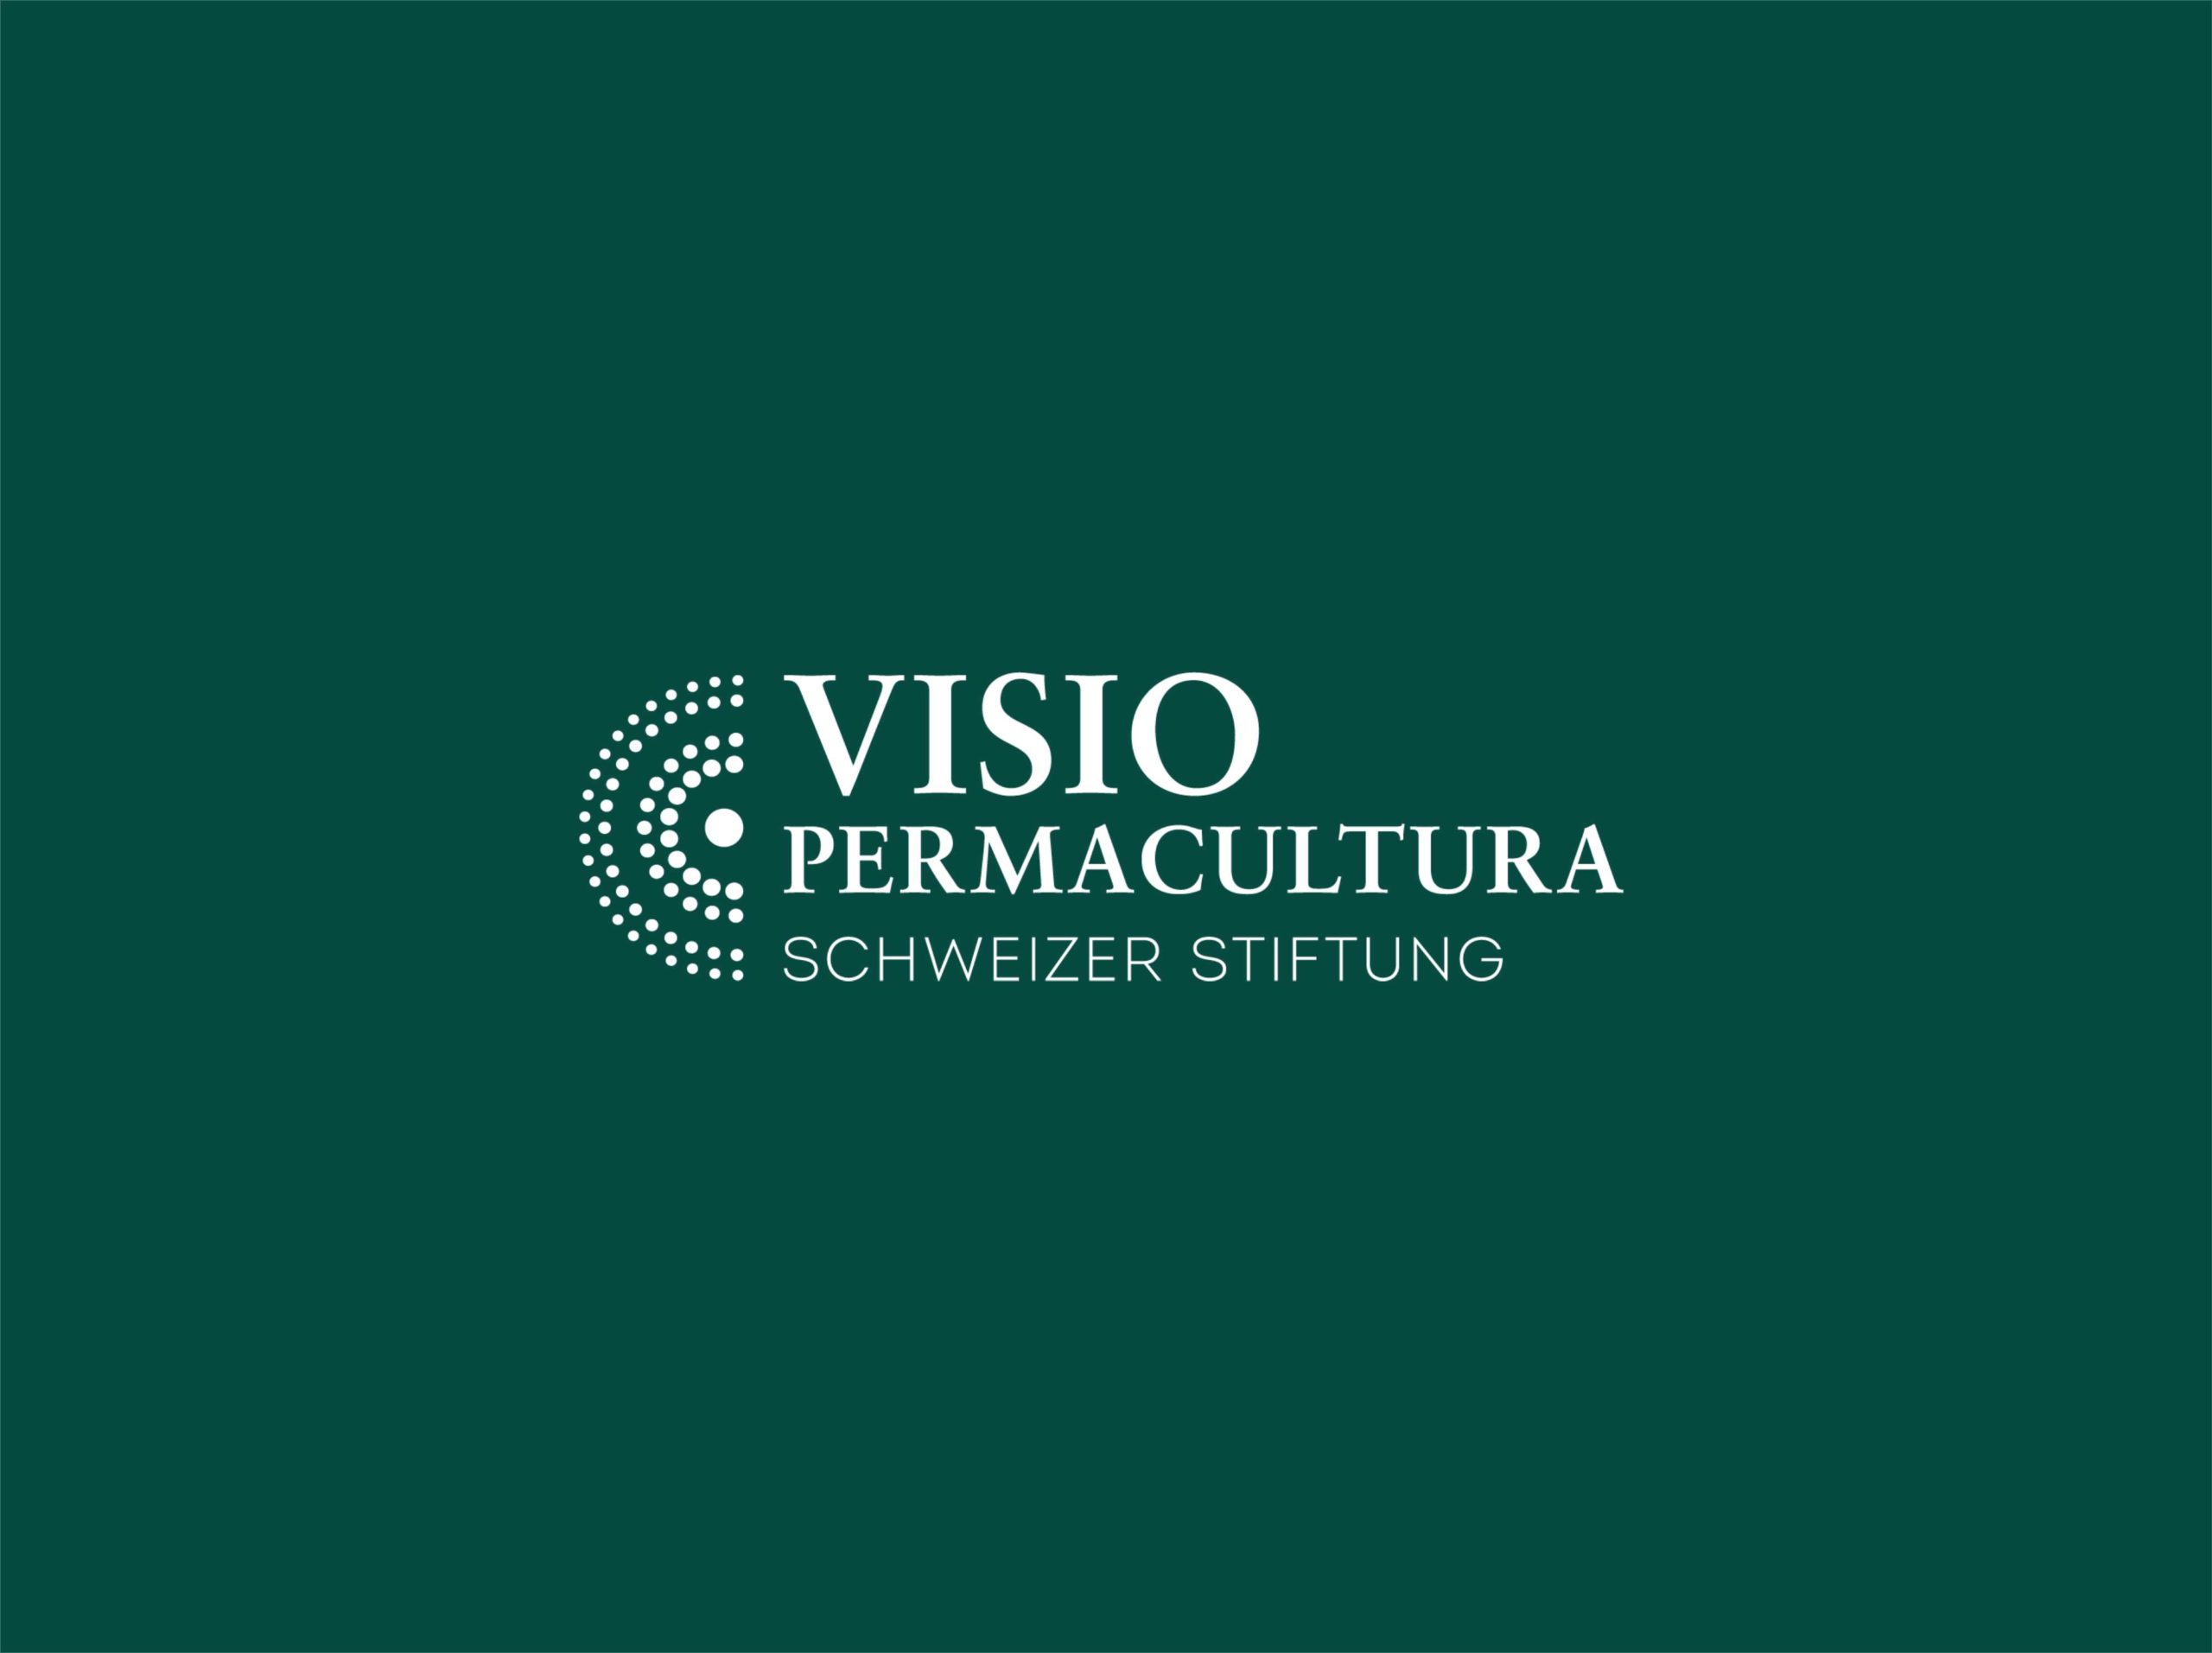 (c) Visio-permacultura.ch